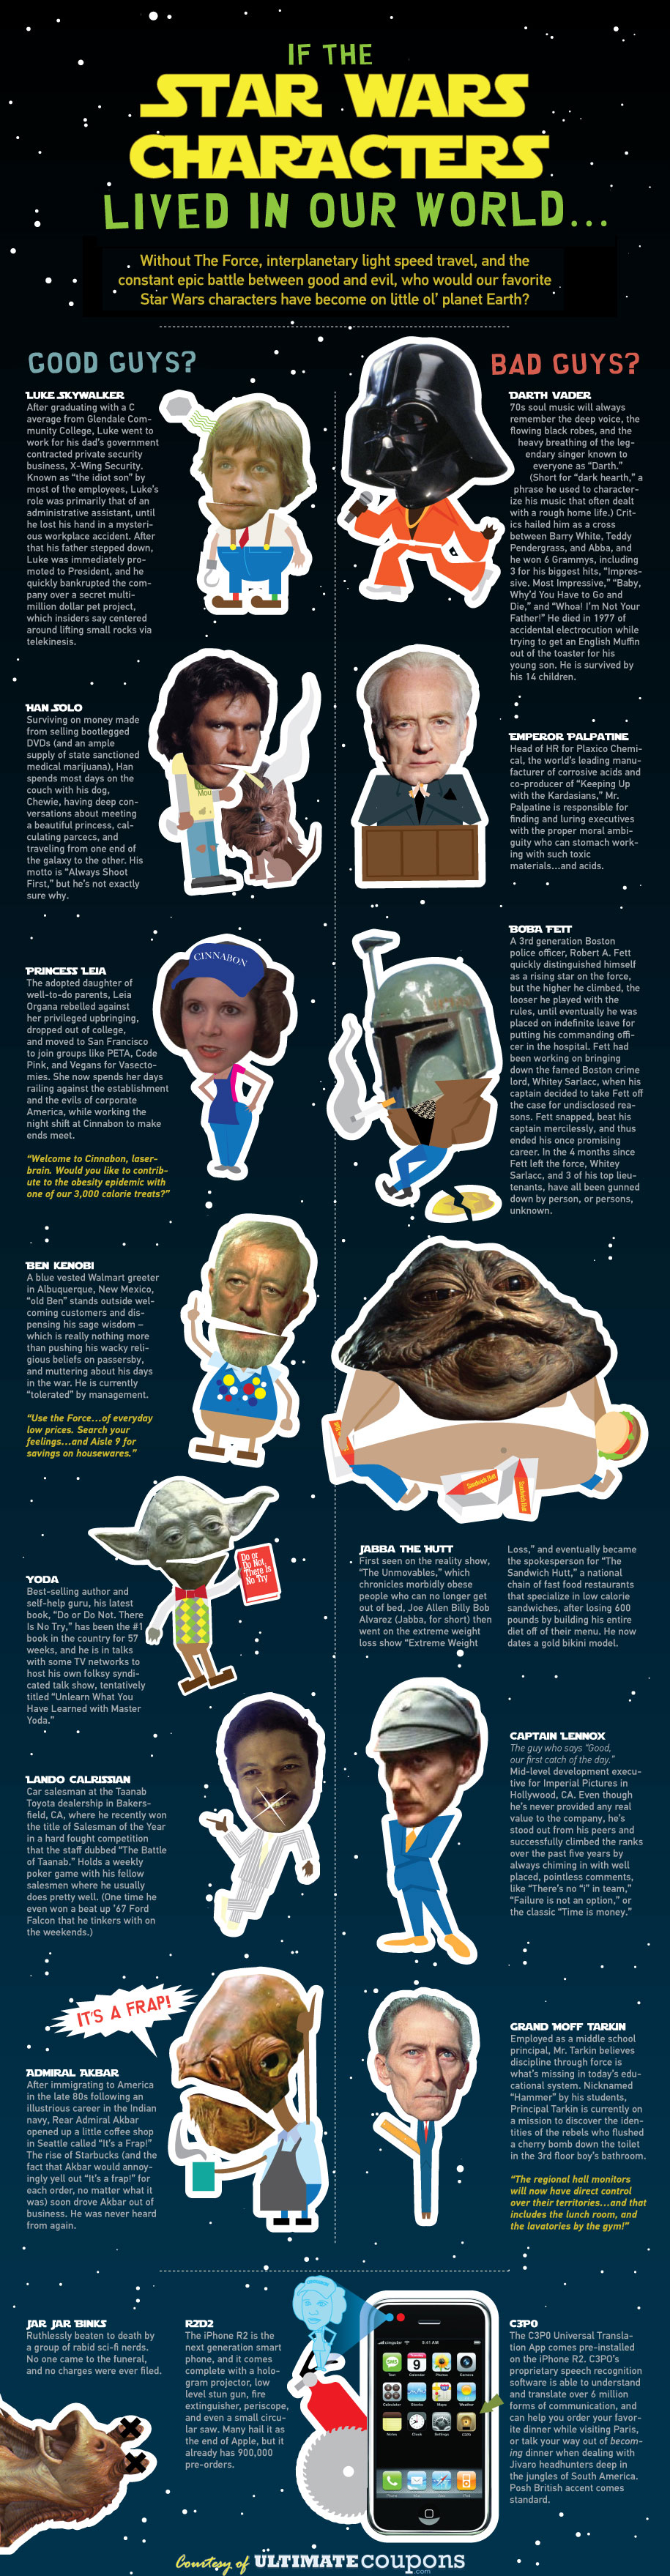 http://www.highdefdigest.com/blog/wp-content/uploads/2011/09/Star-Wars-Infographic.jpg